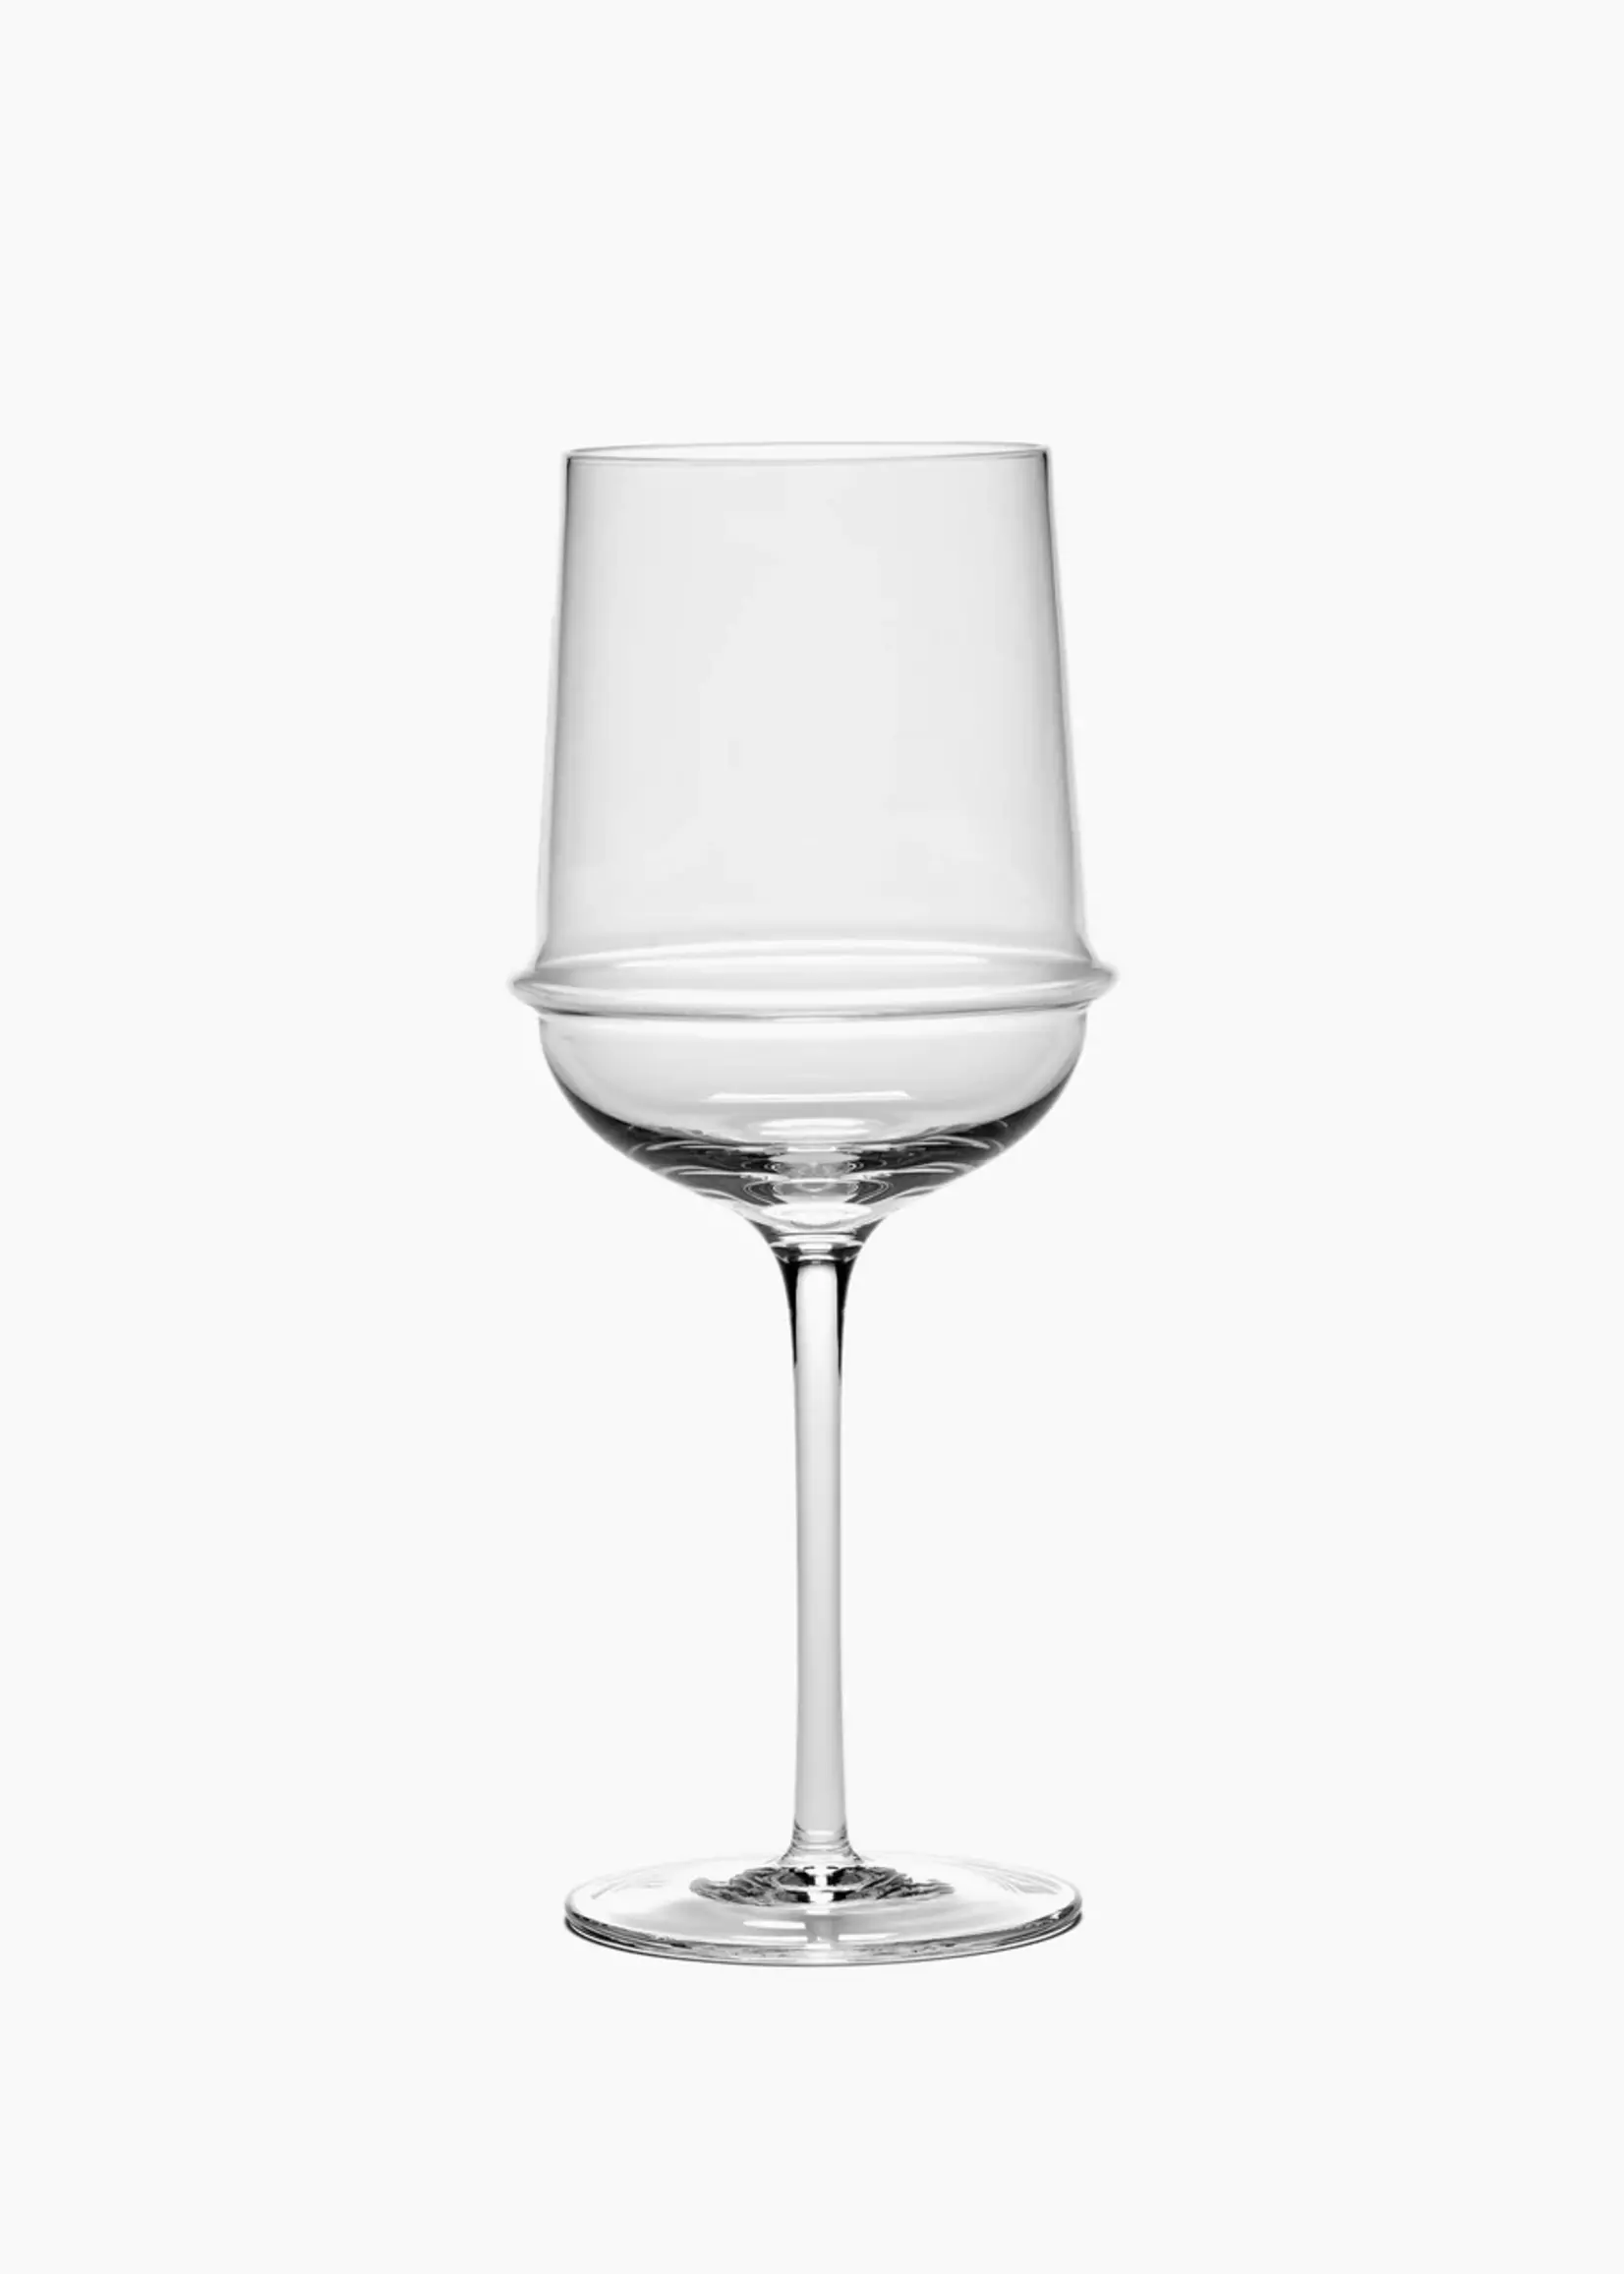 Serax Serax - Kelly Wearstler - Dune - Verre - verre à vin blanc